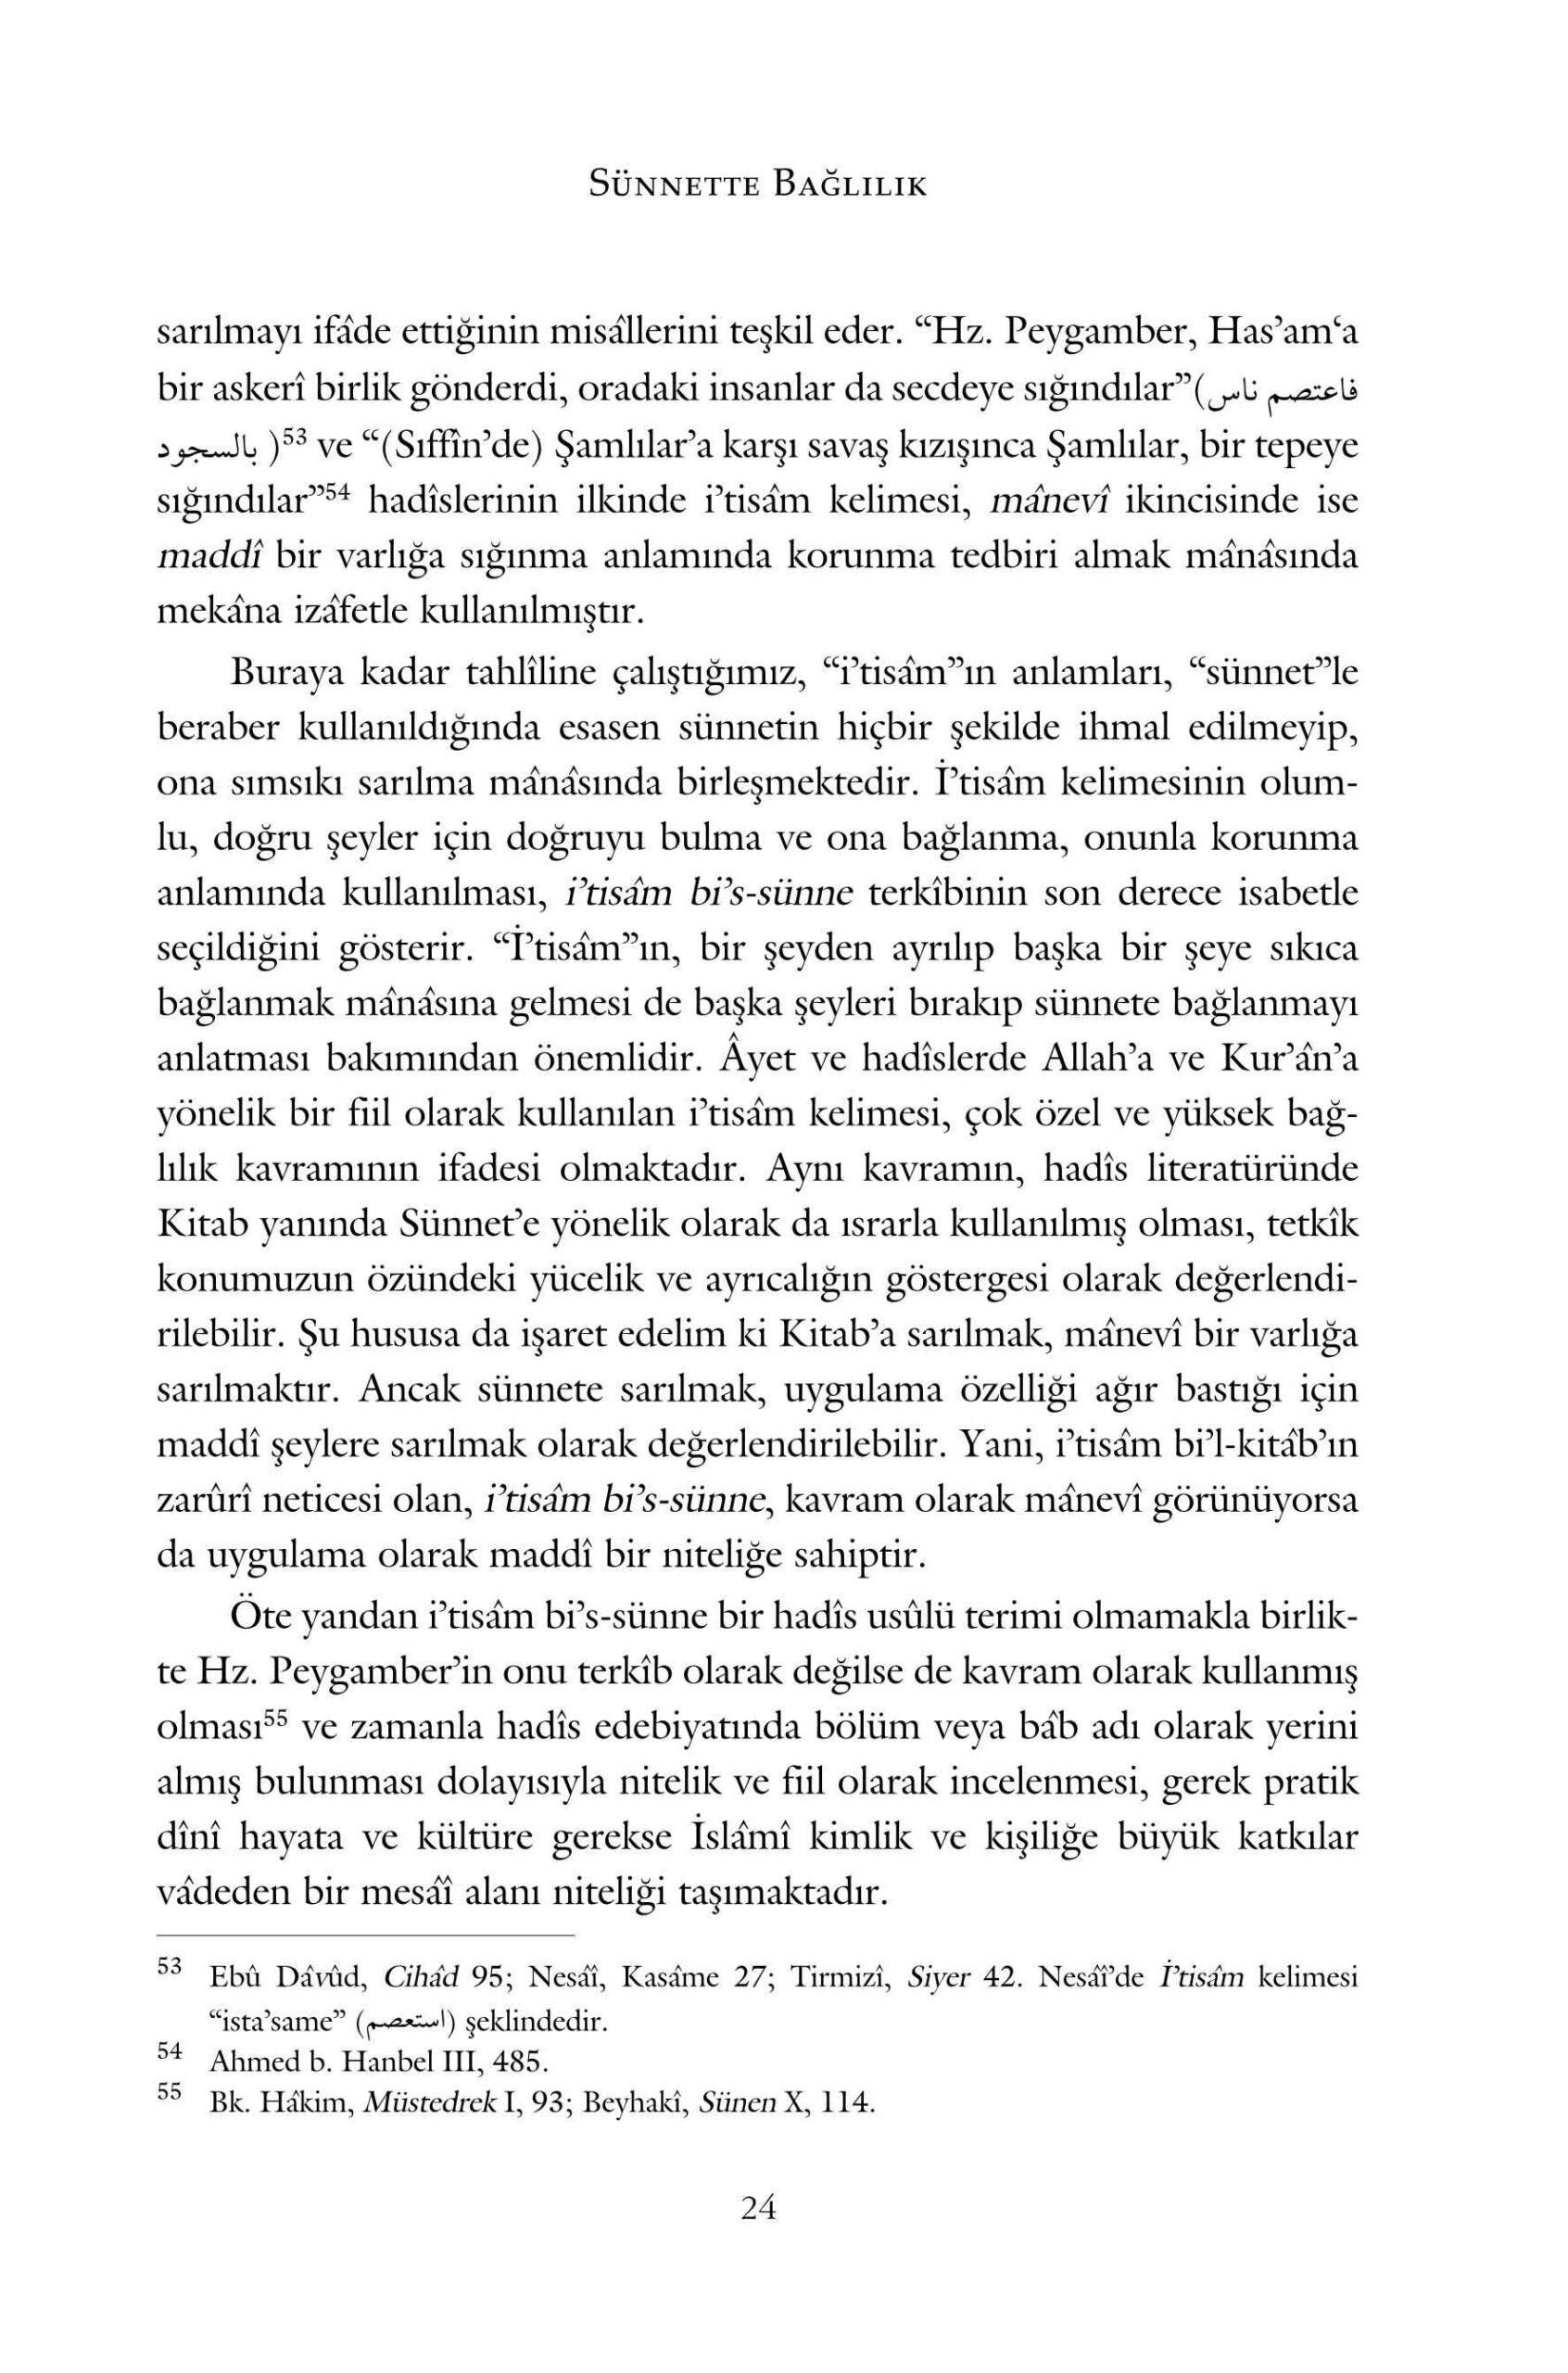 Aynur Uraler - Sahabe Uygulamasi Olarak Sunnete Baglilik - IsikAkademiY.pdf, 465-Sayfa 